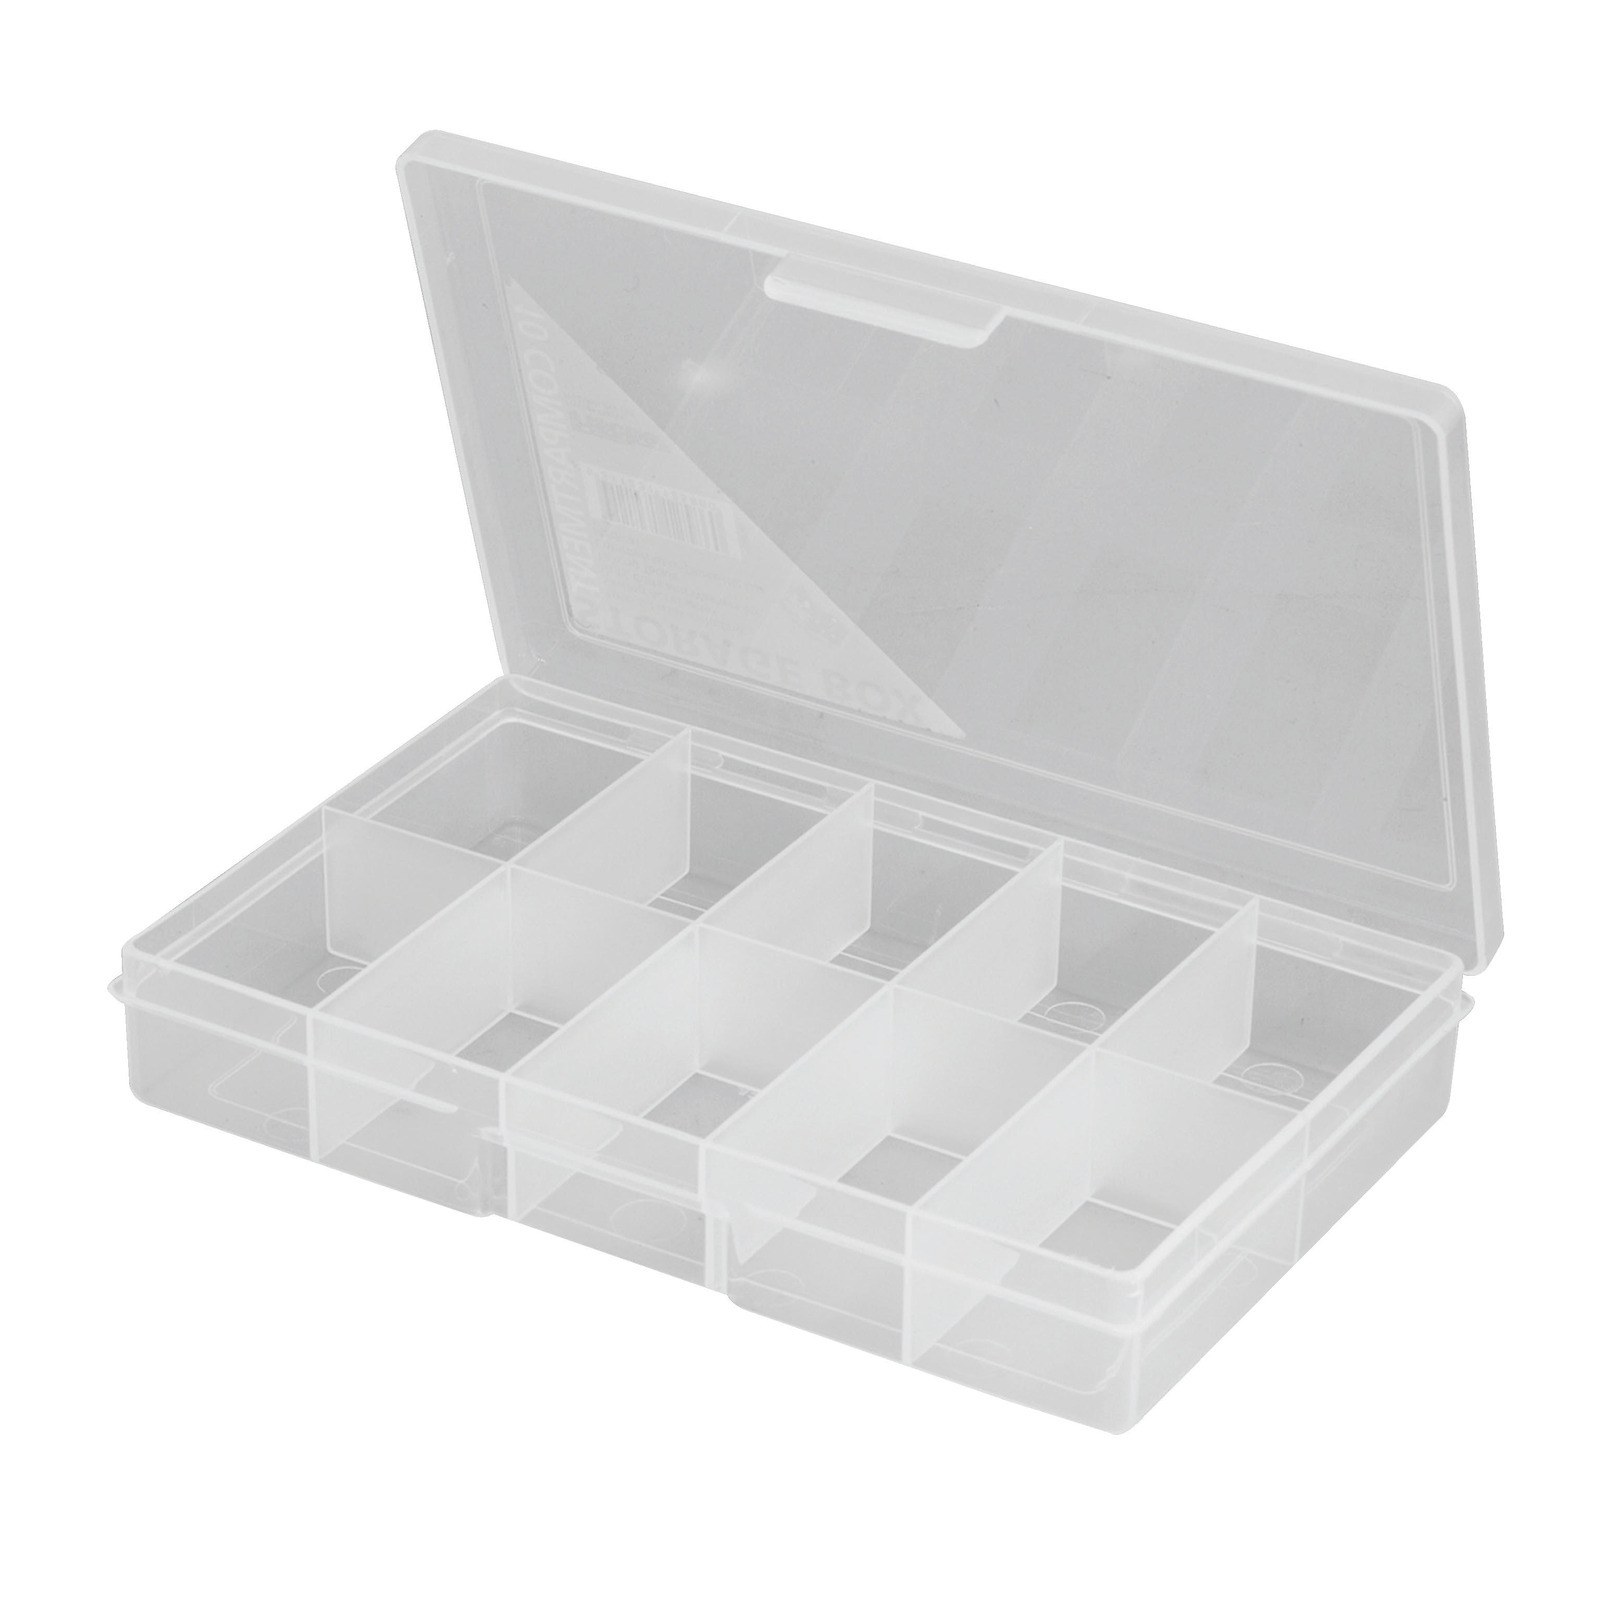 Accessory Boxes - Small (10 compartments)